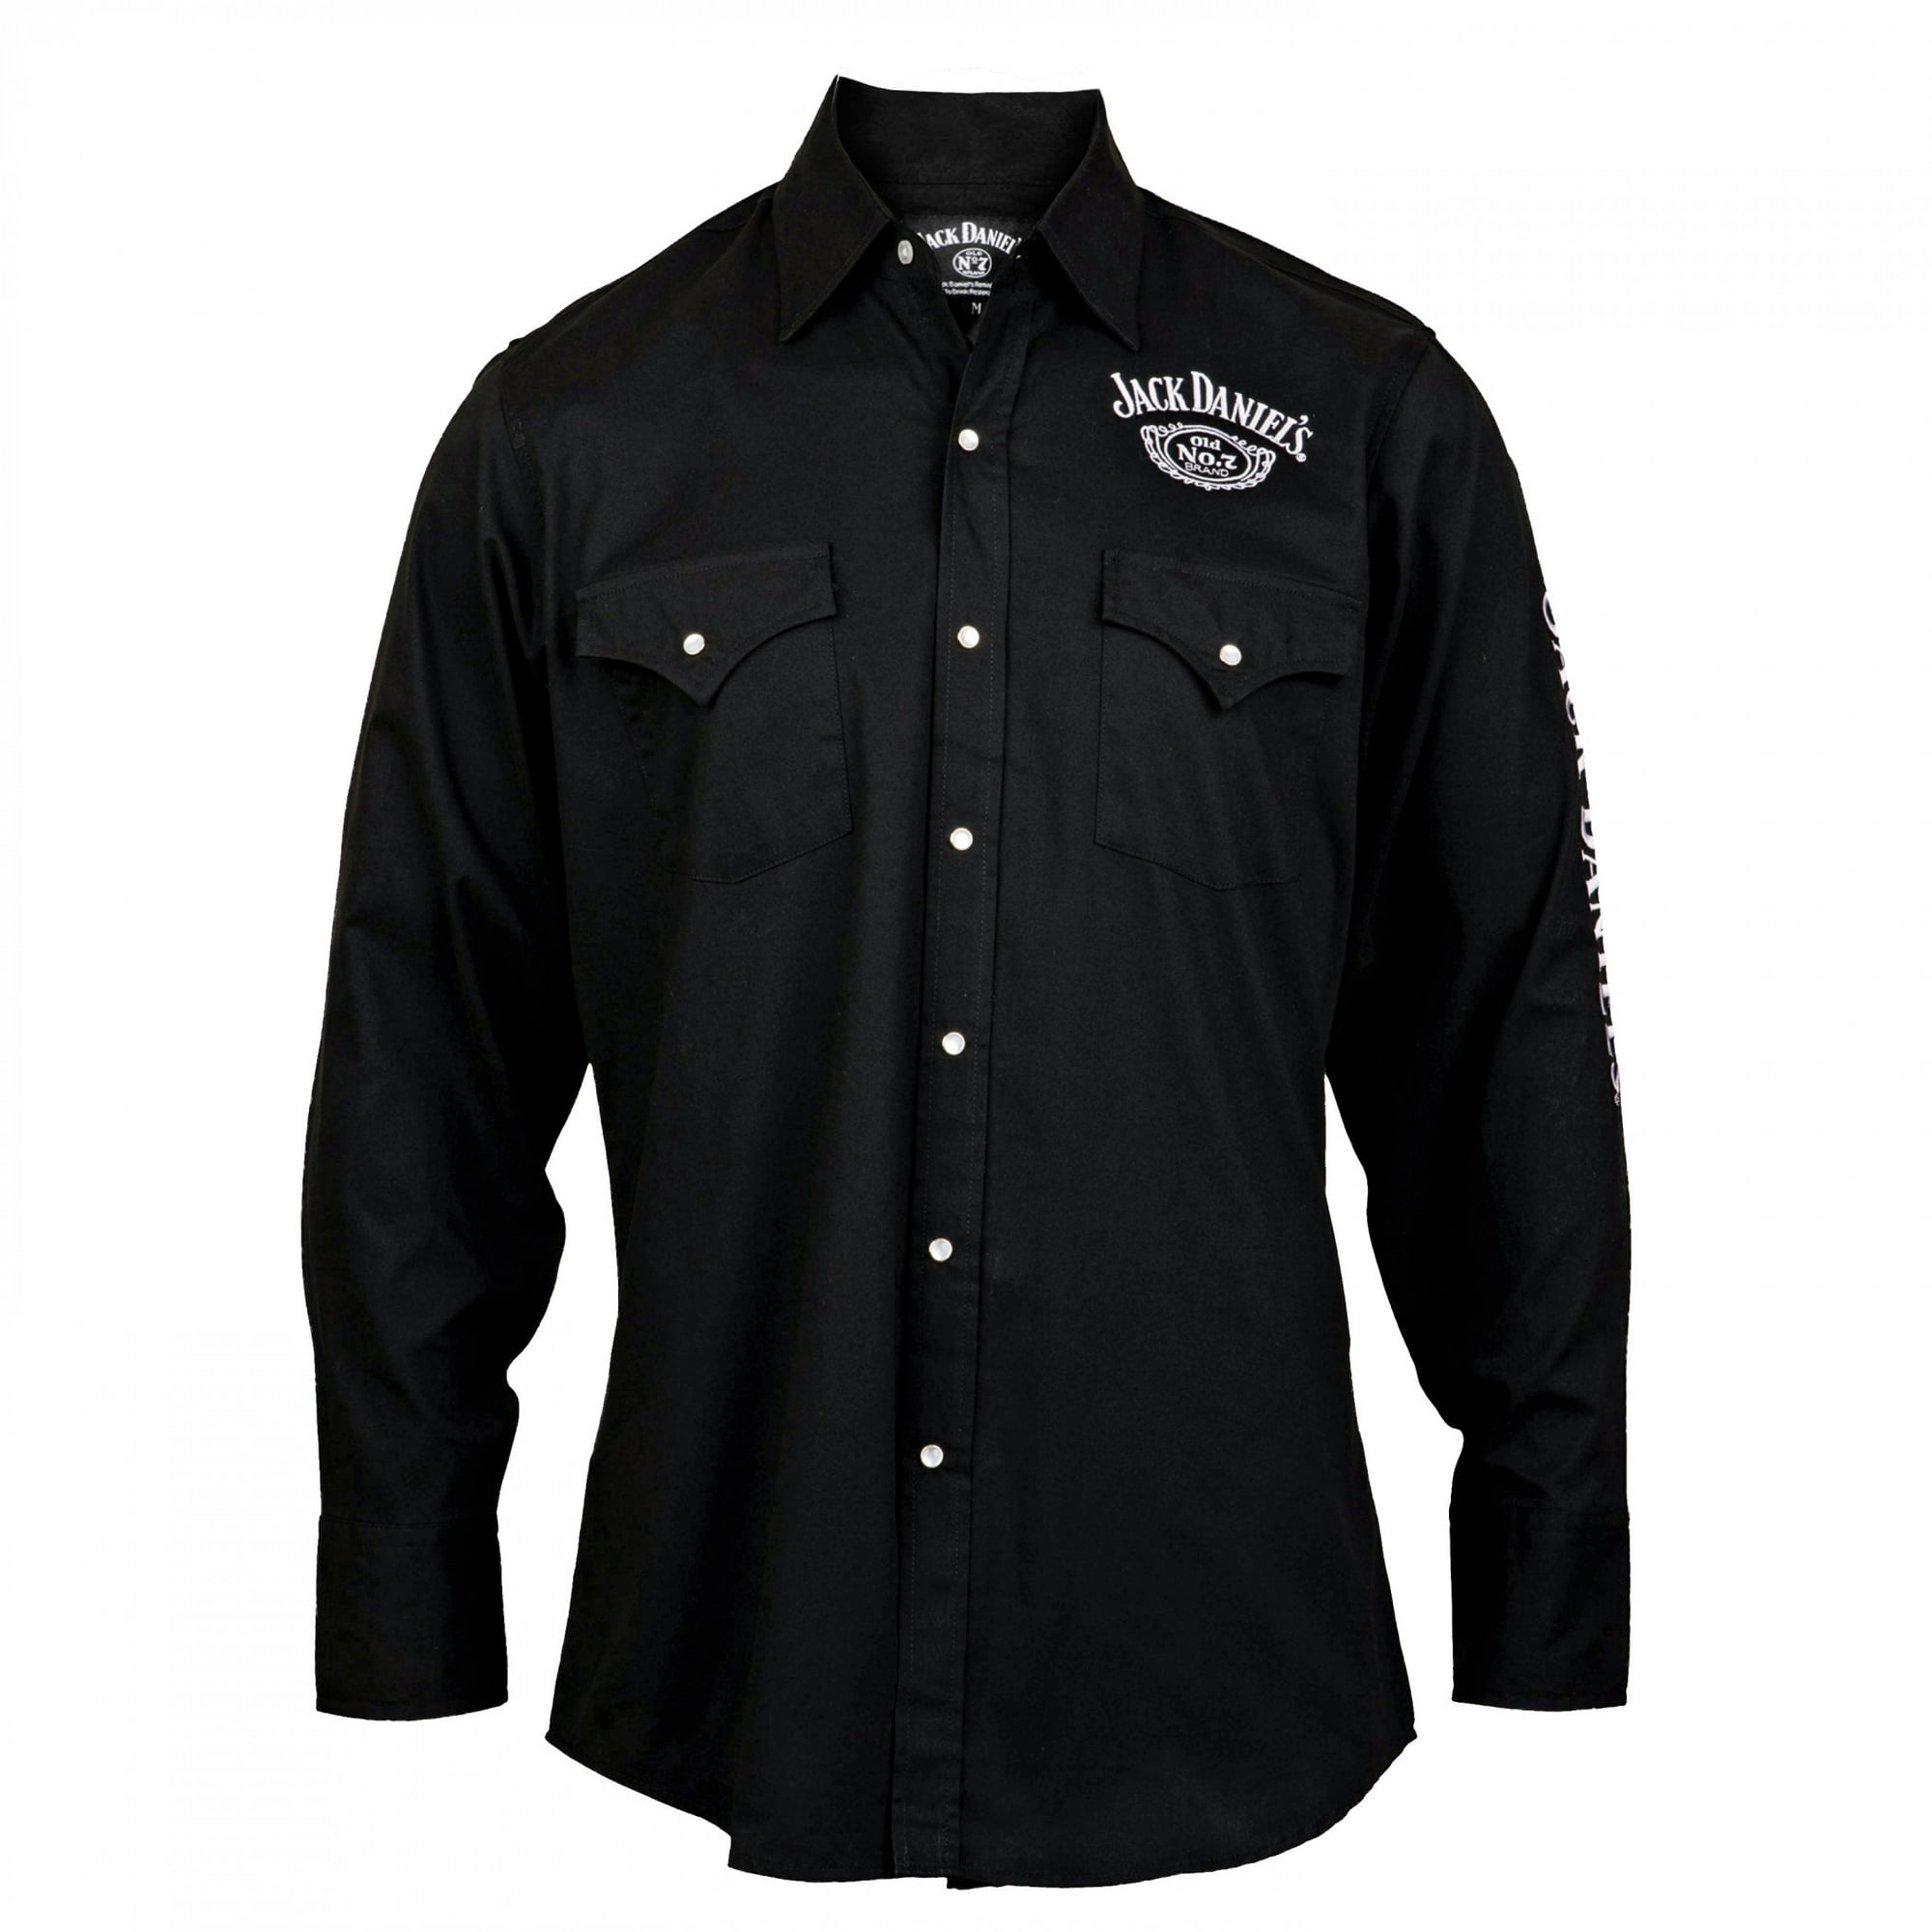 Jack Daniel's Long Sleeve Button Up Shirt-Medium | Walmart Canada